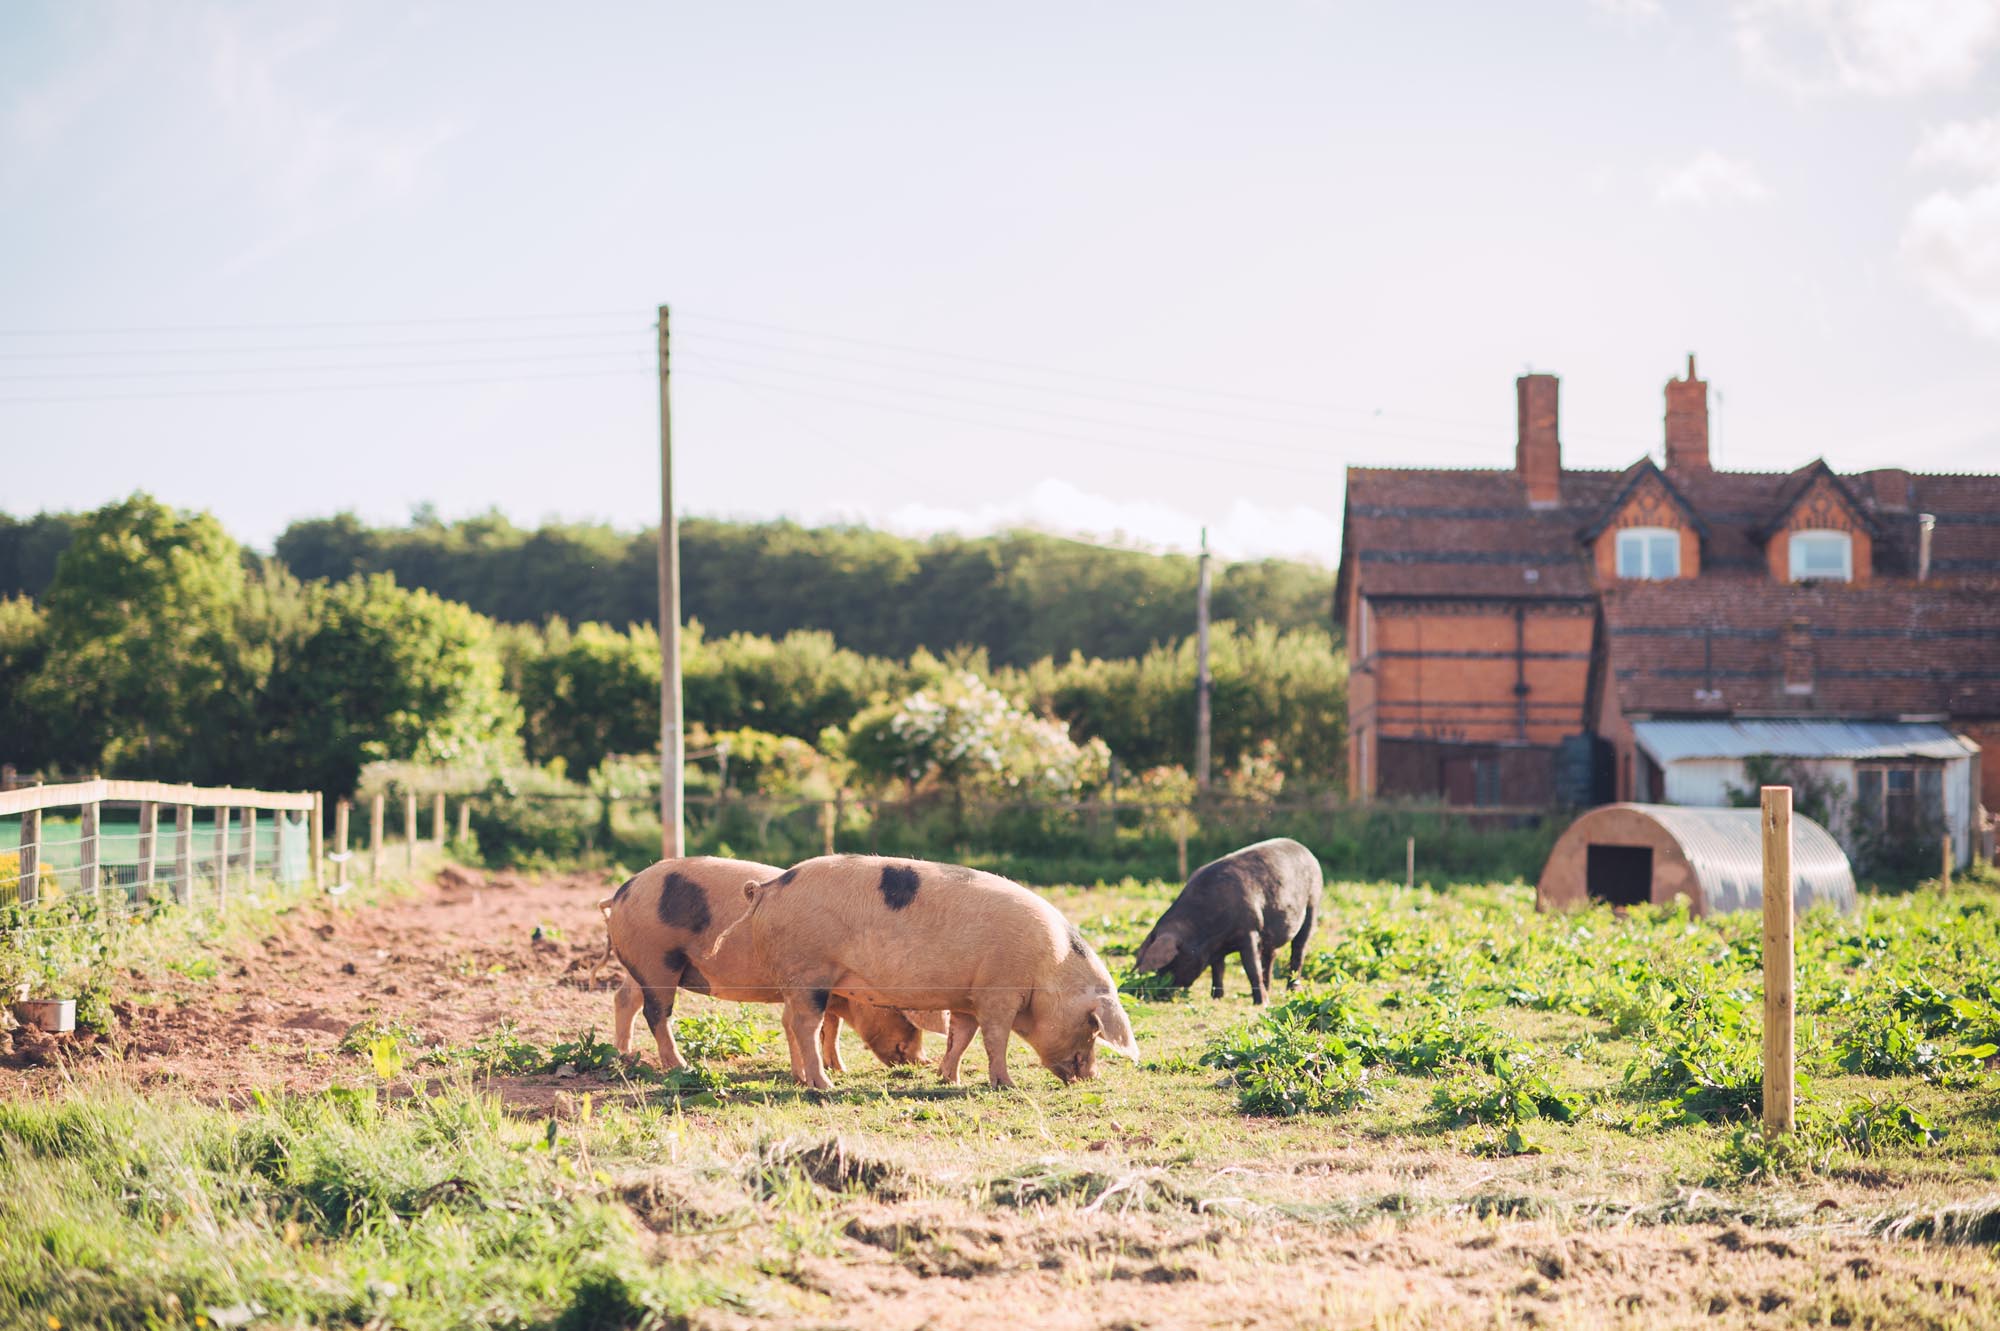 Nicola & Richard Wedding at Huntstile Farm - Pigs